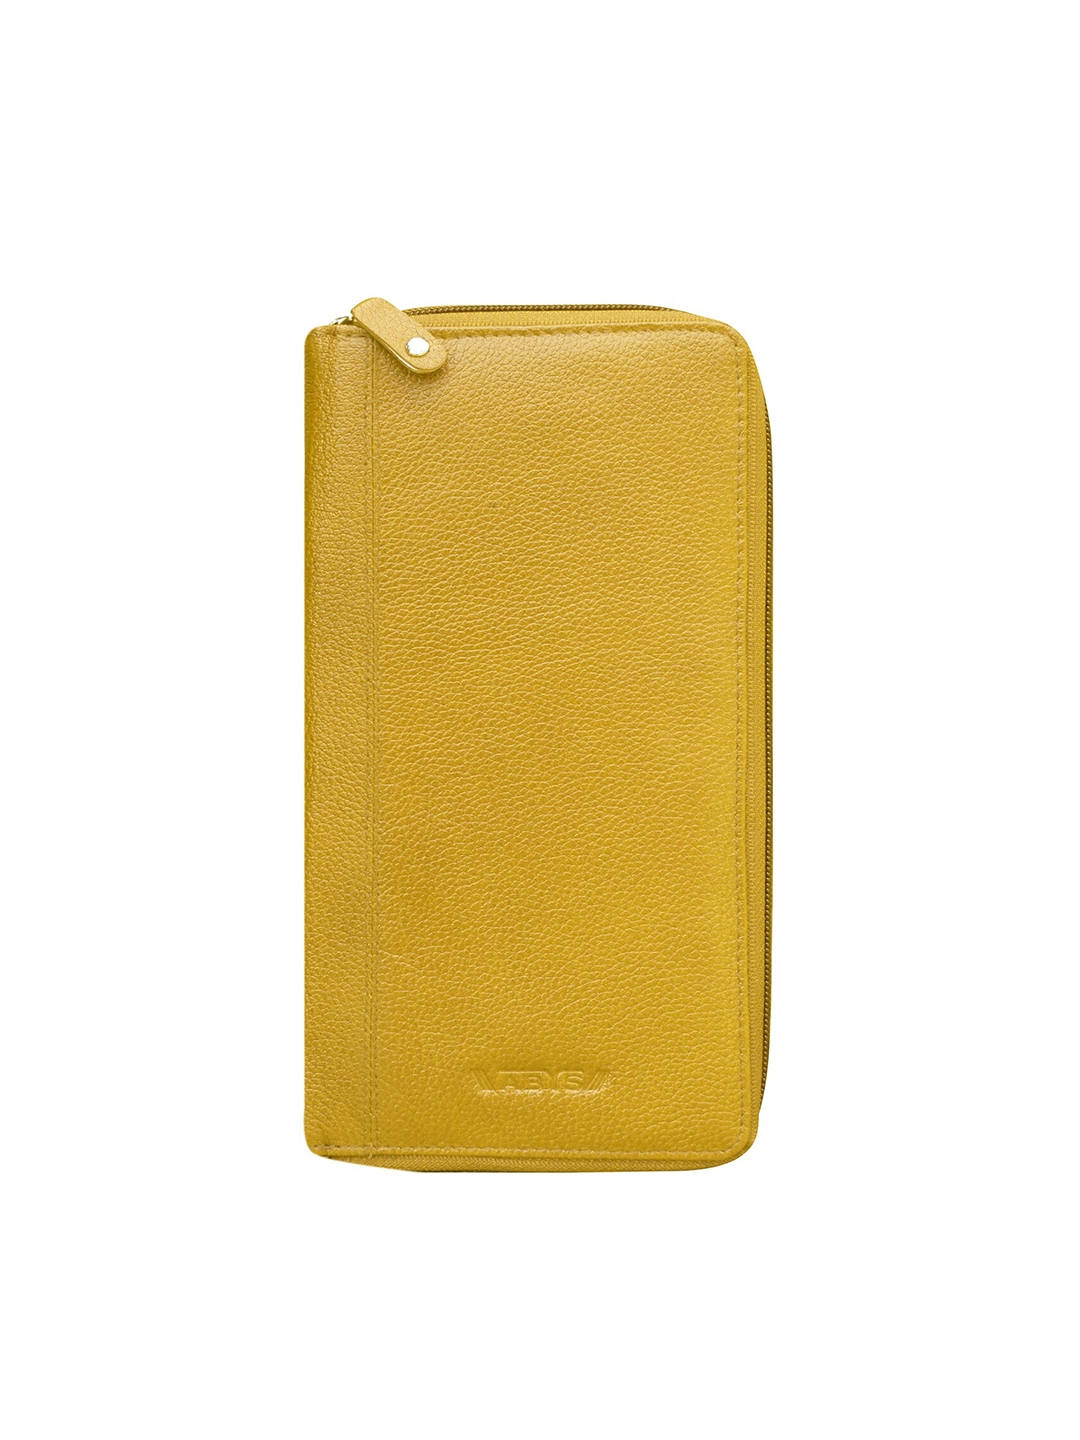 ABYS Unisex Yellow Leather Zip Around Wallet with Passport Holder